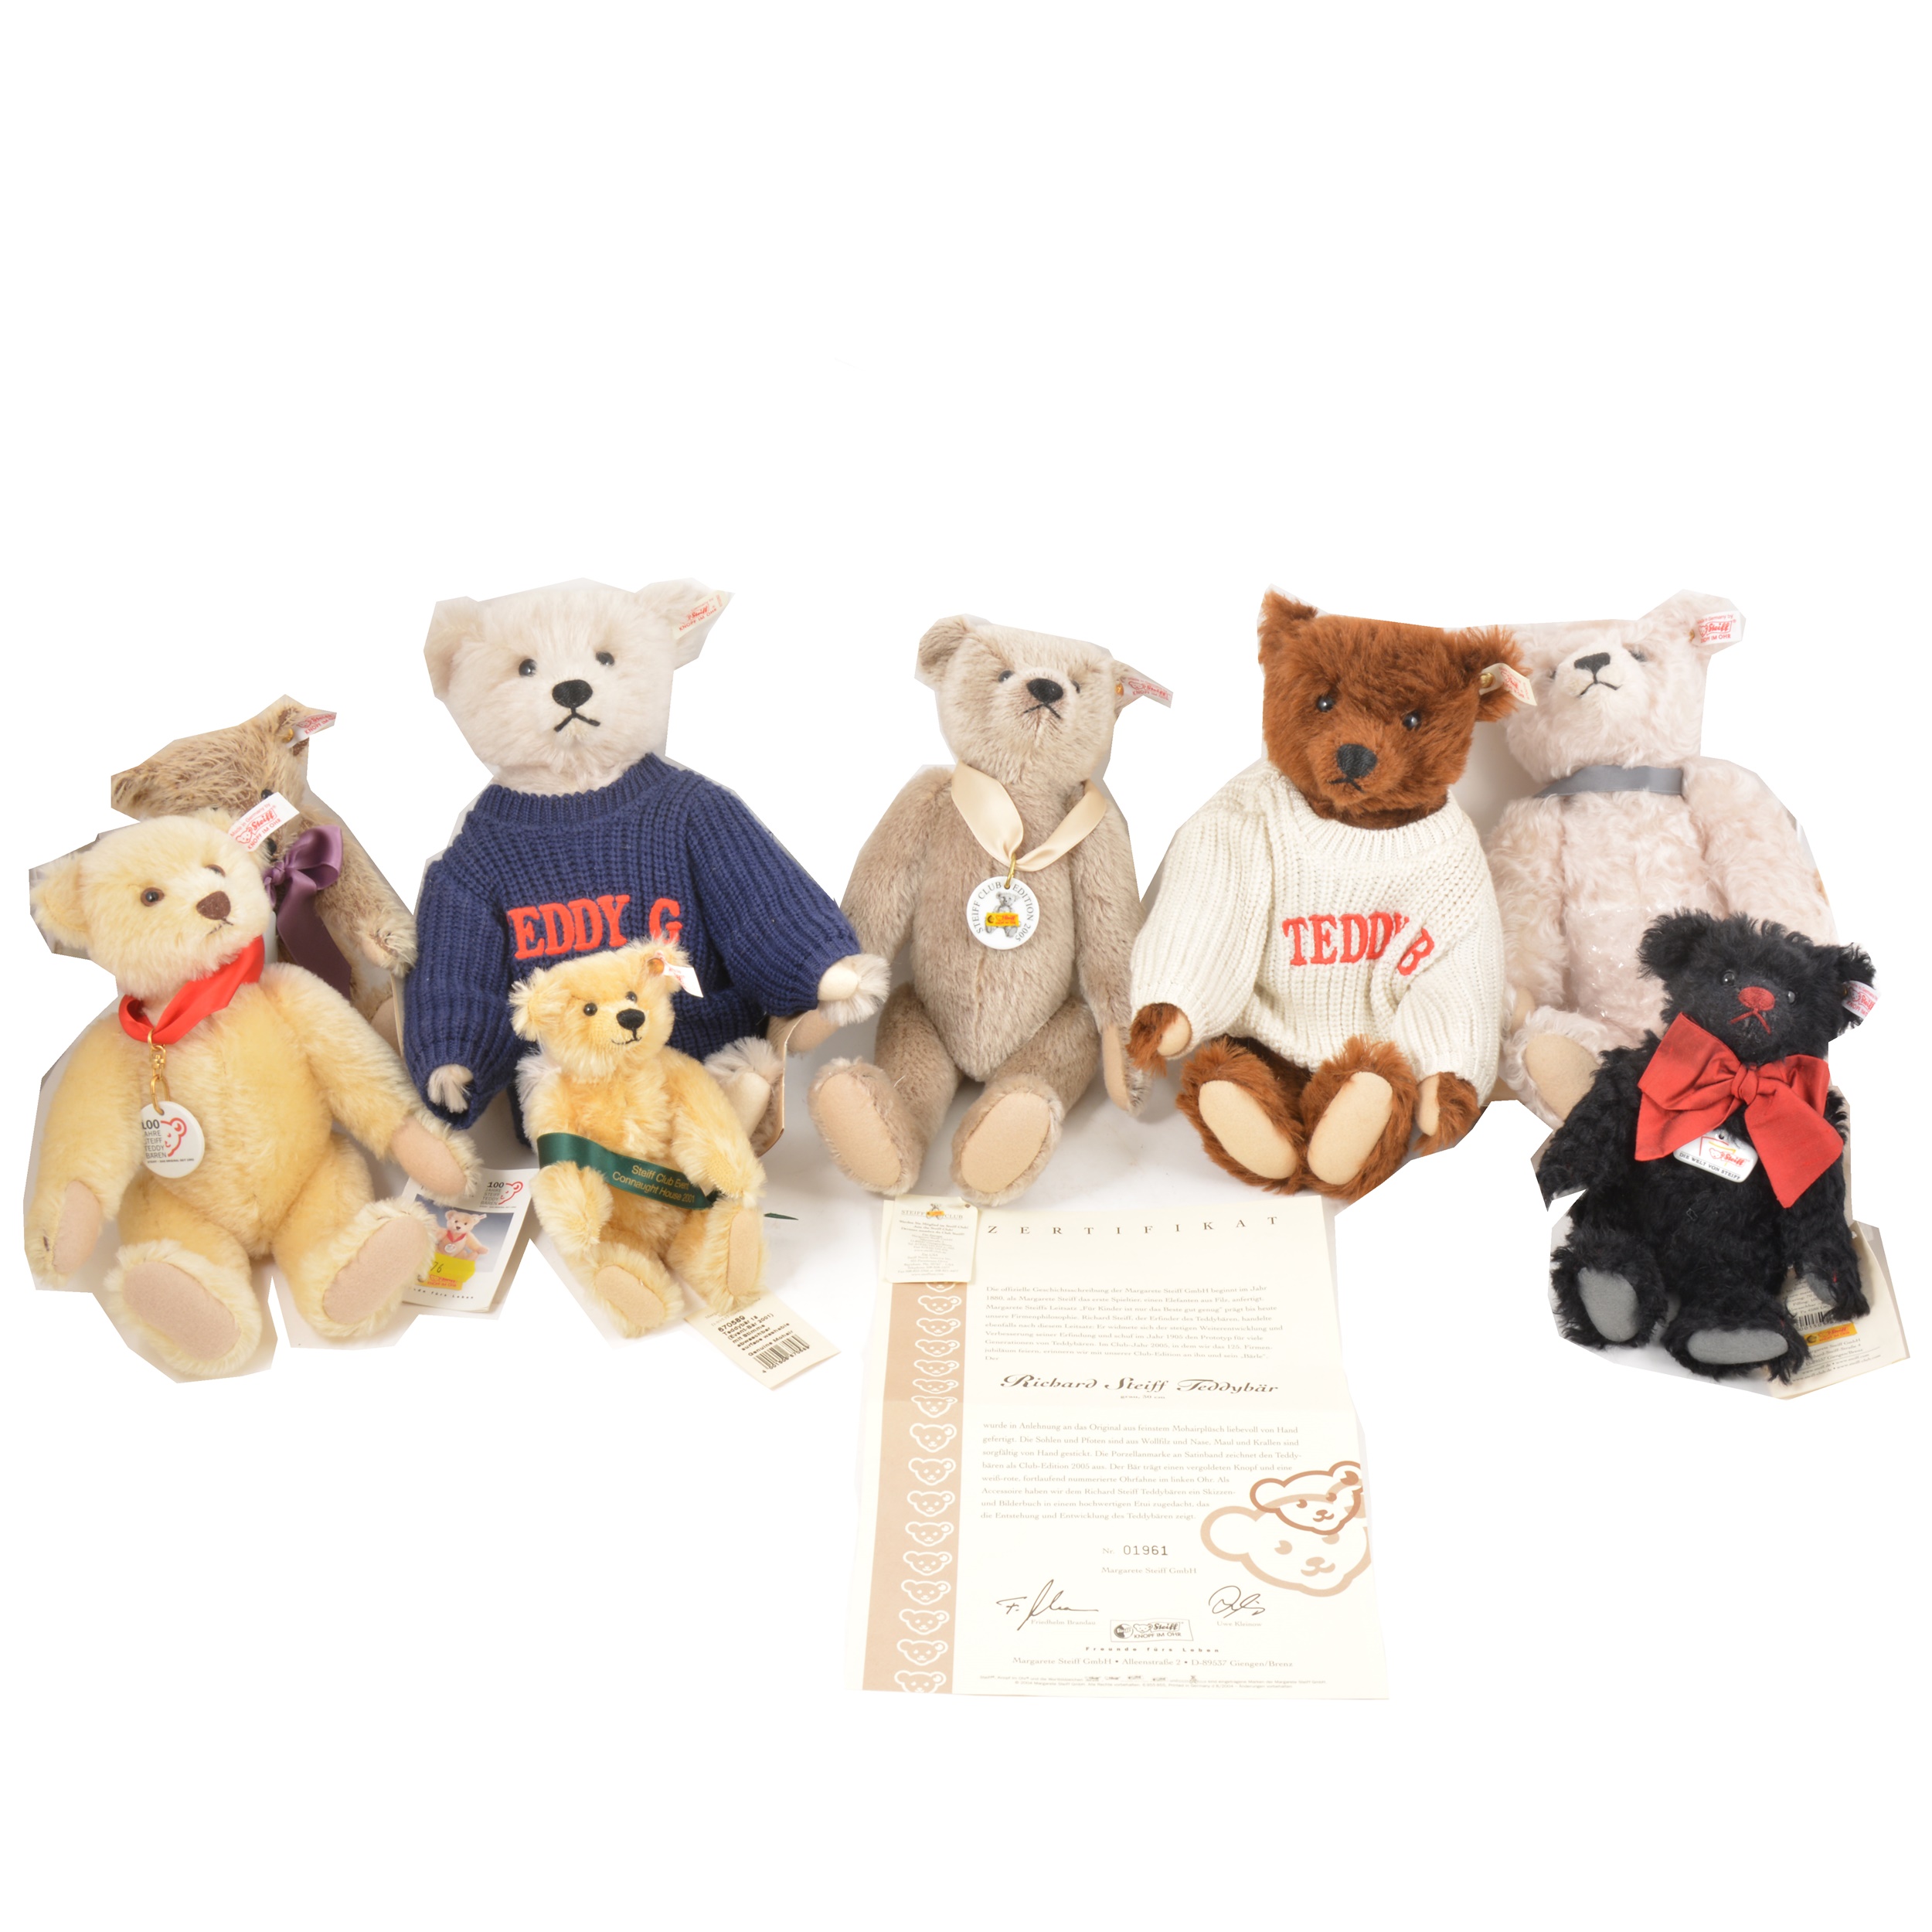 Modern Steiff teddy bears; eight to include Eddy G, Teddy B etc